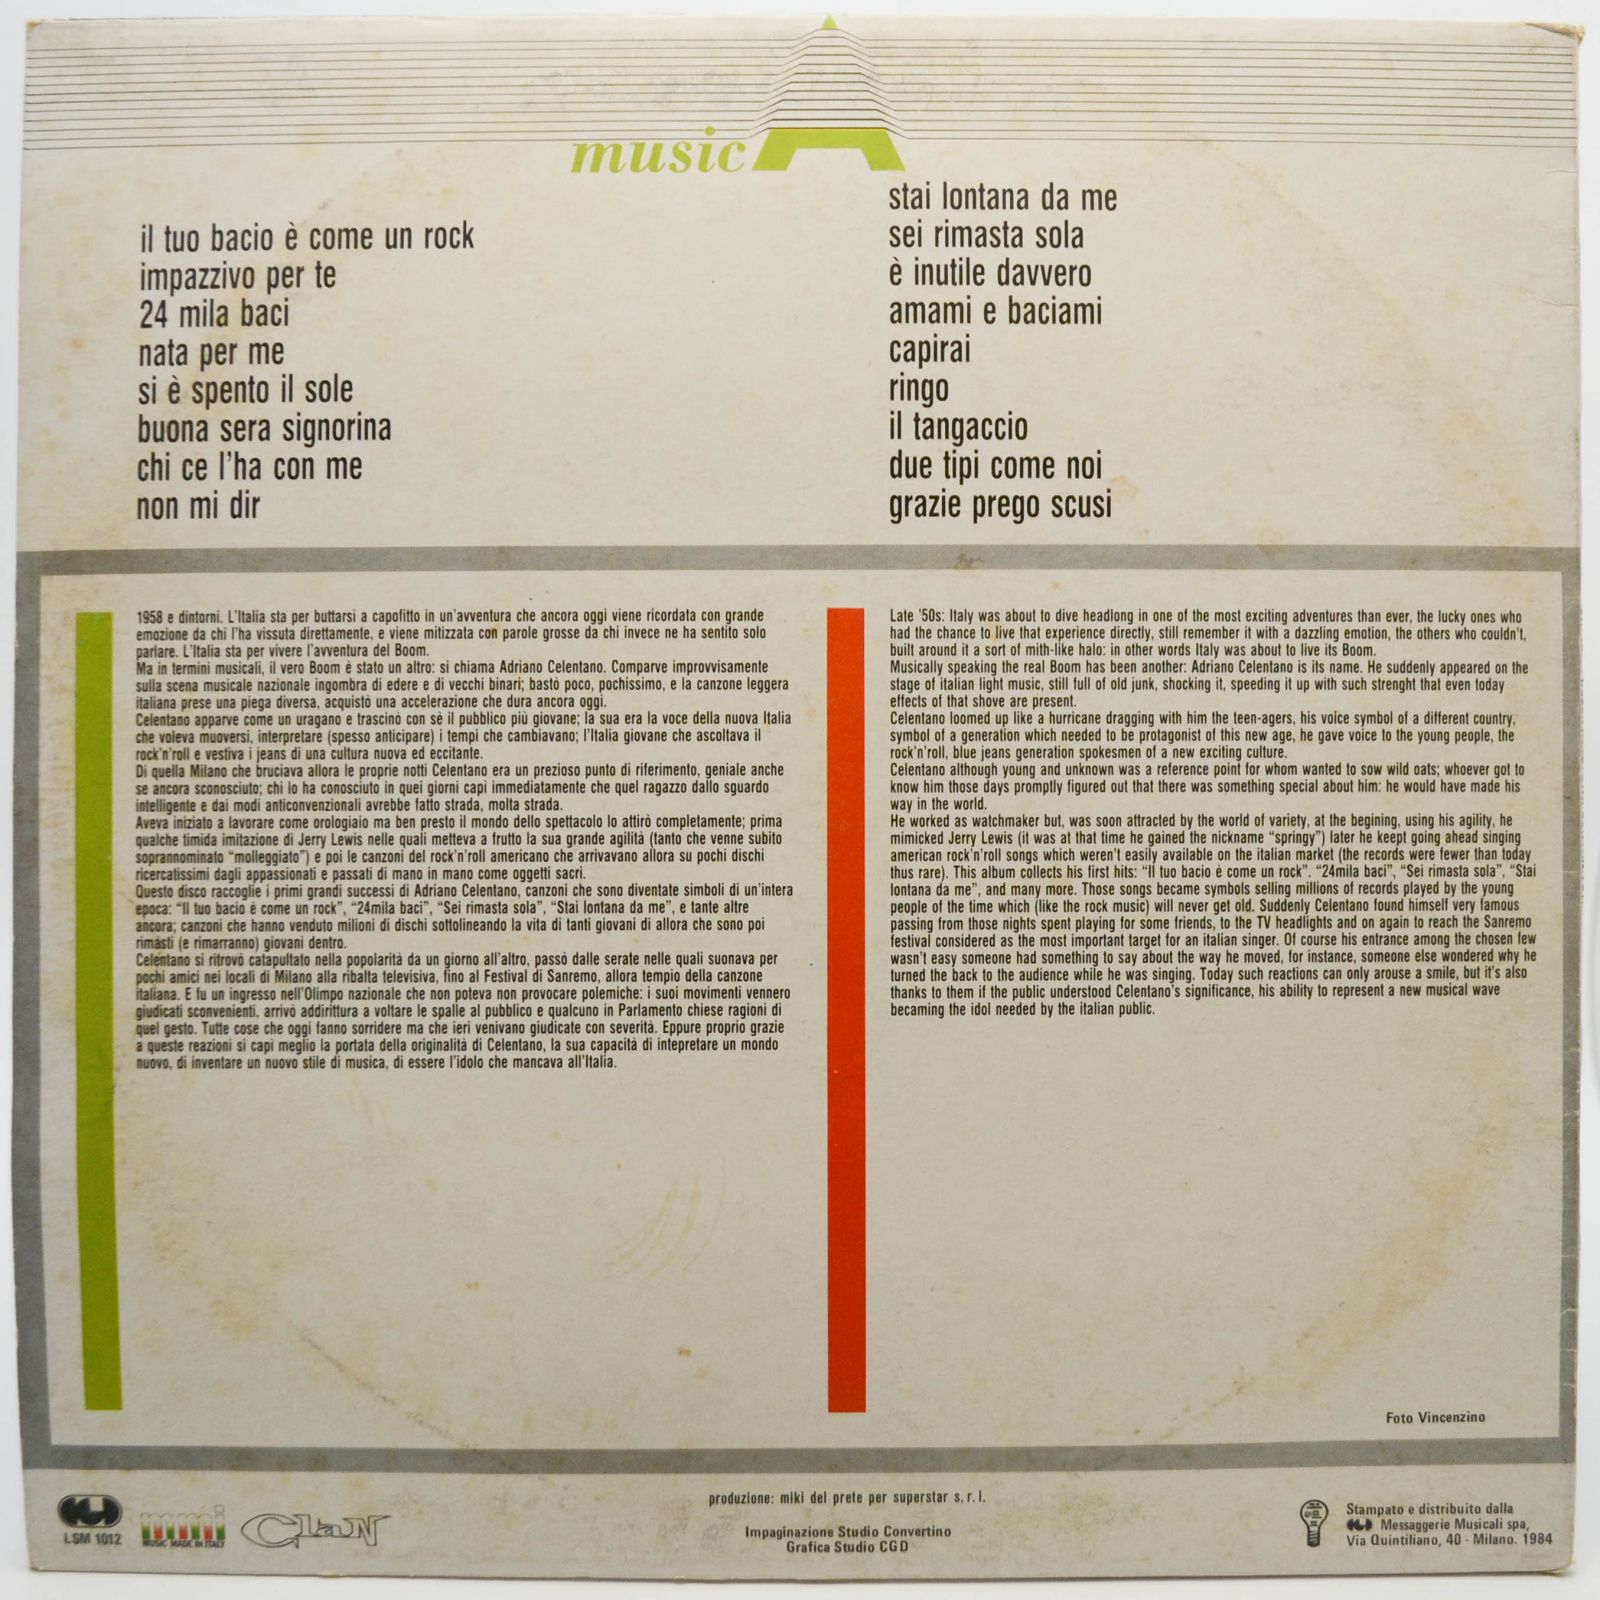 Adriano Celentano — Stai Lontana Da Me (1-st, Clan, Italy), 1984